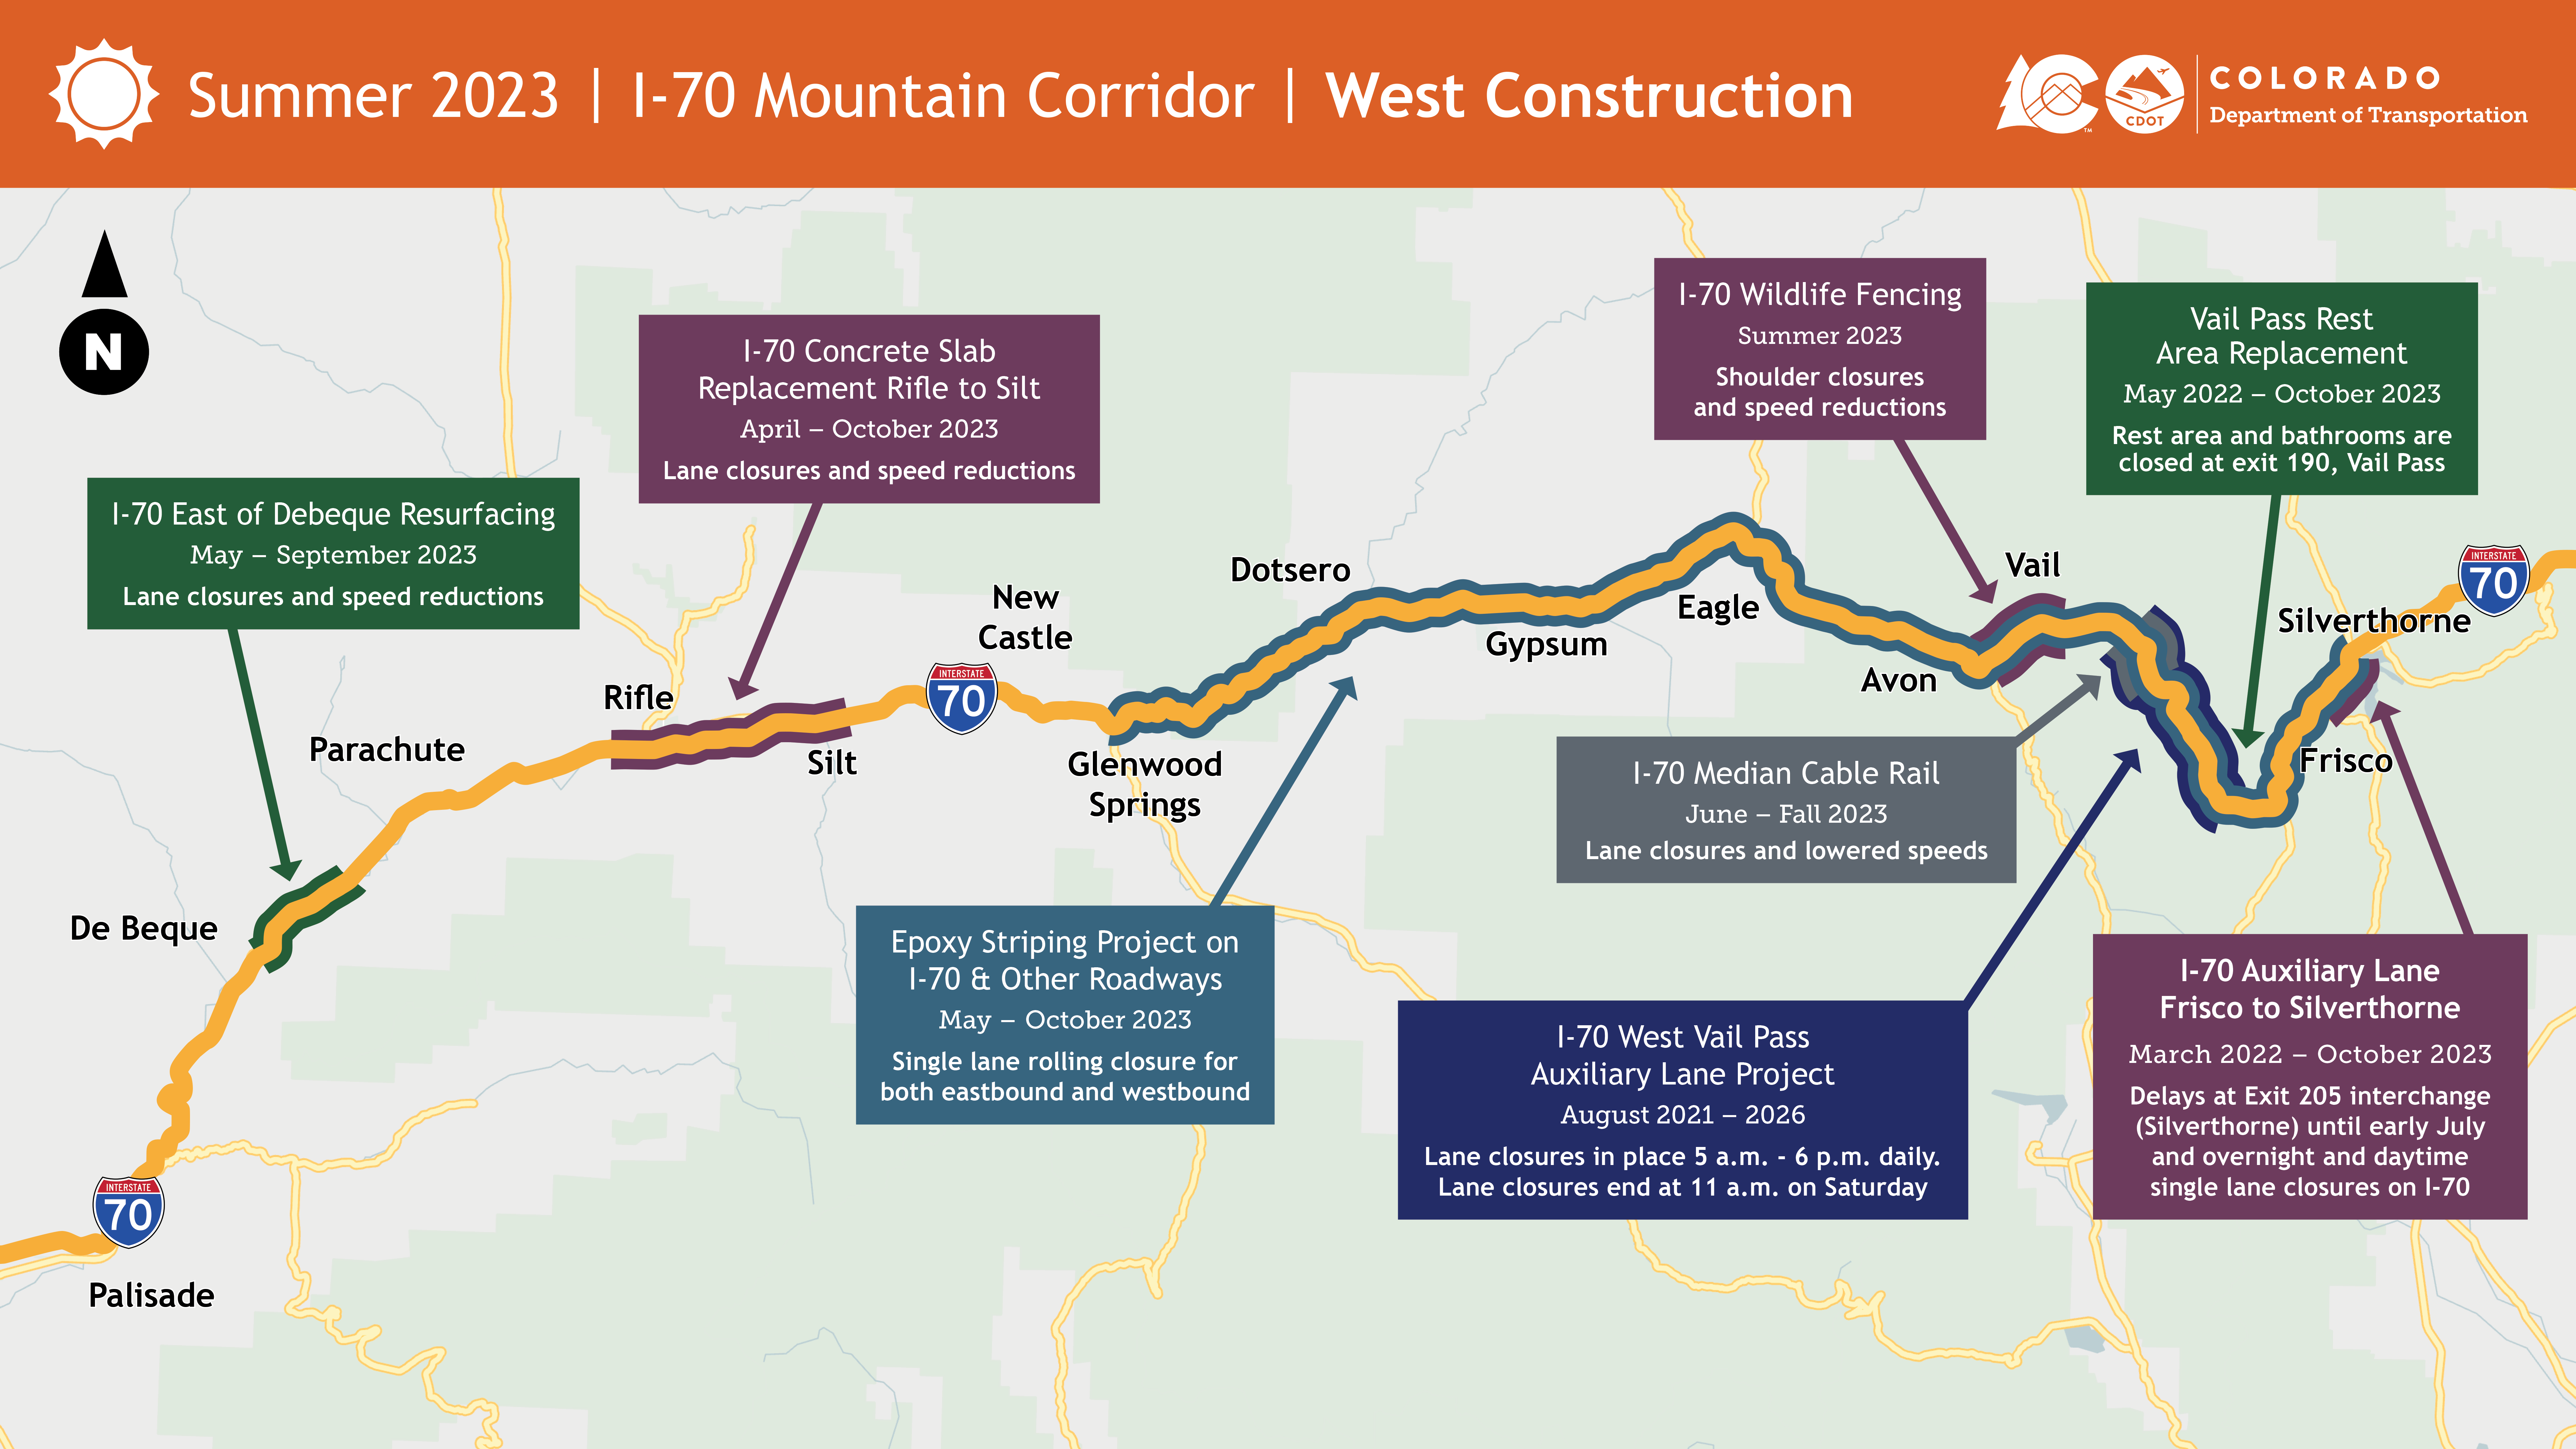 I-70-Mtn-Corridor-Construction-Map-Summer-2023_WEST.png detail image